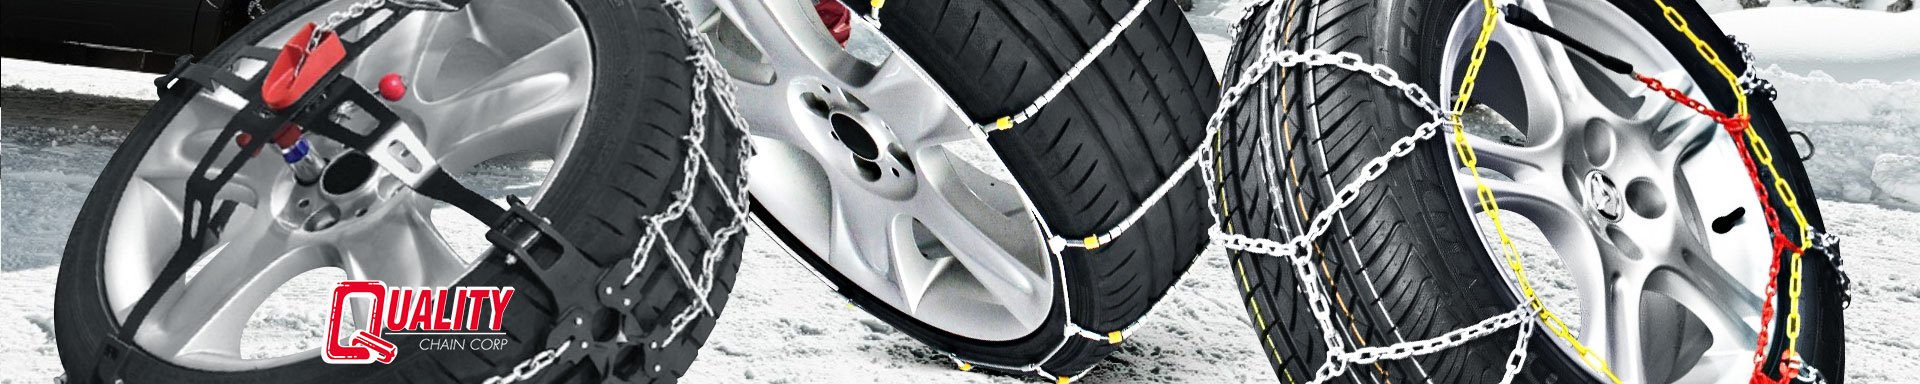 Quality Chain Tire Chains